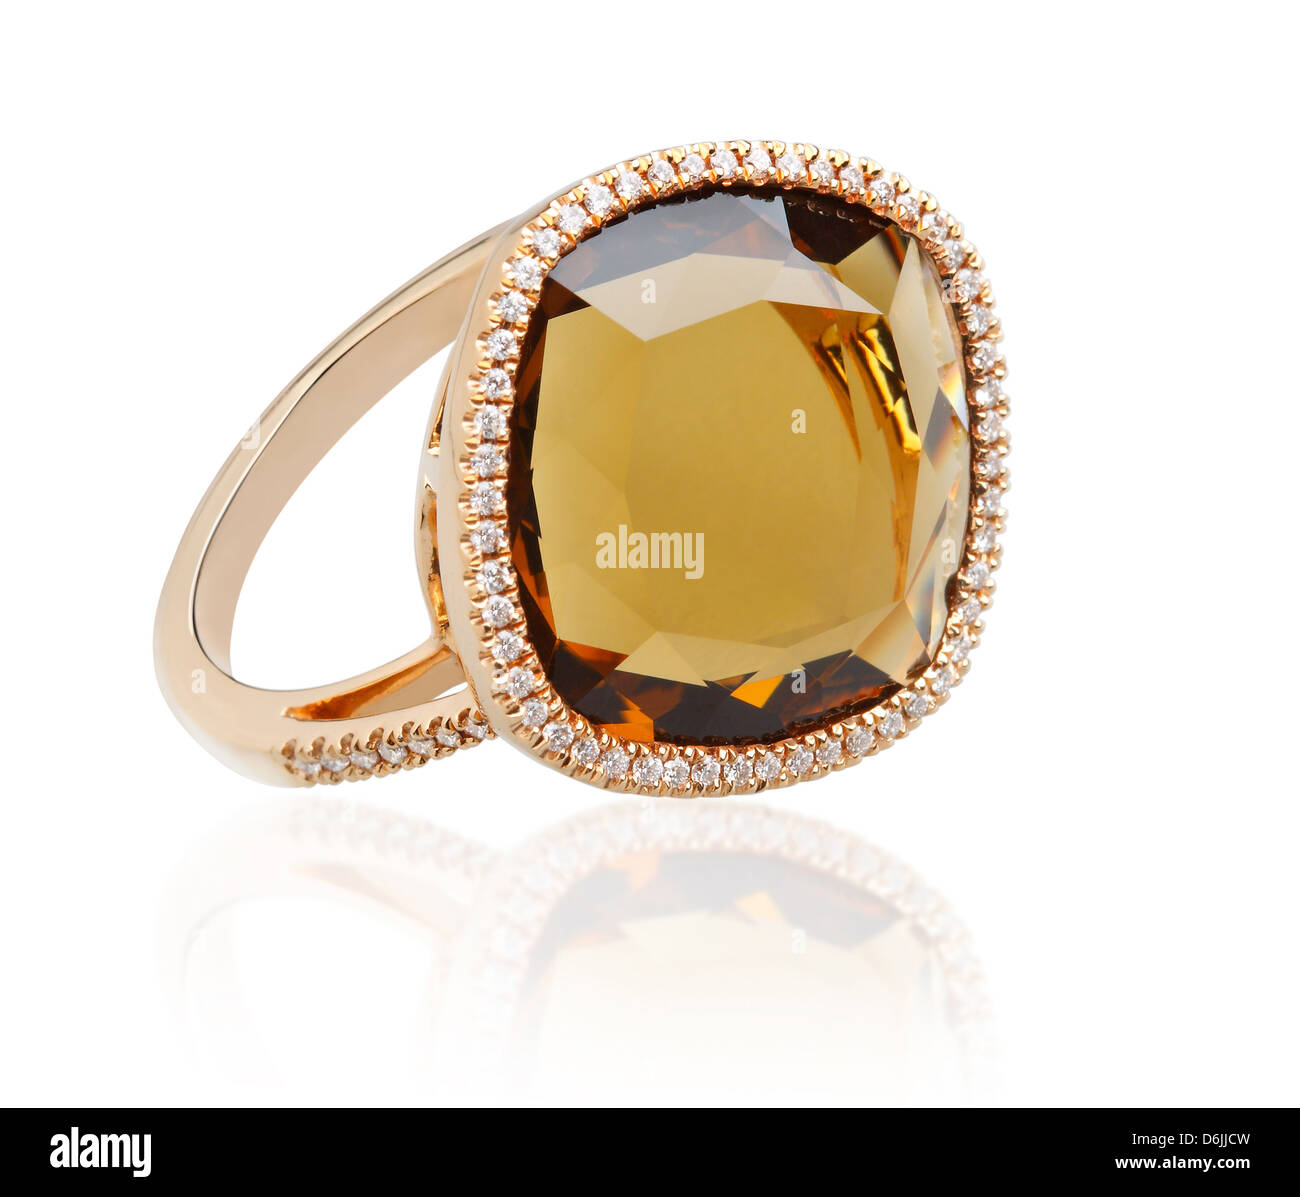 Luxury topaz ring surrounded by shiny diamonds Stock Photo